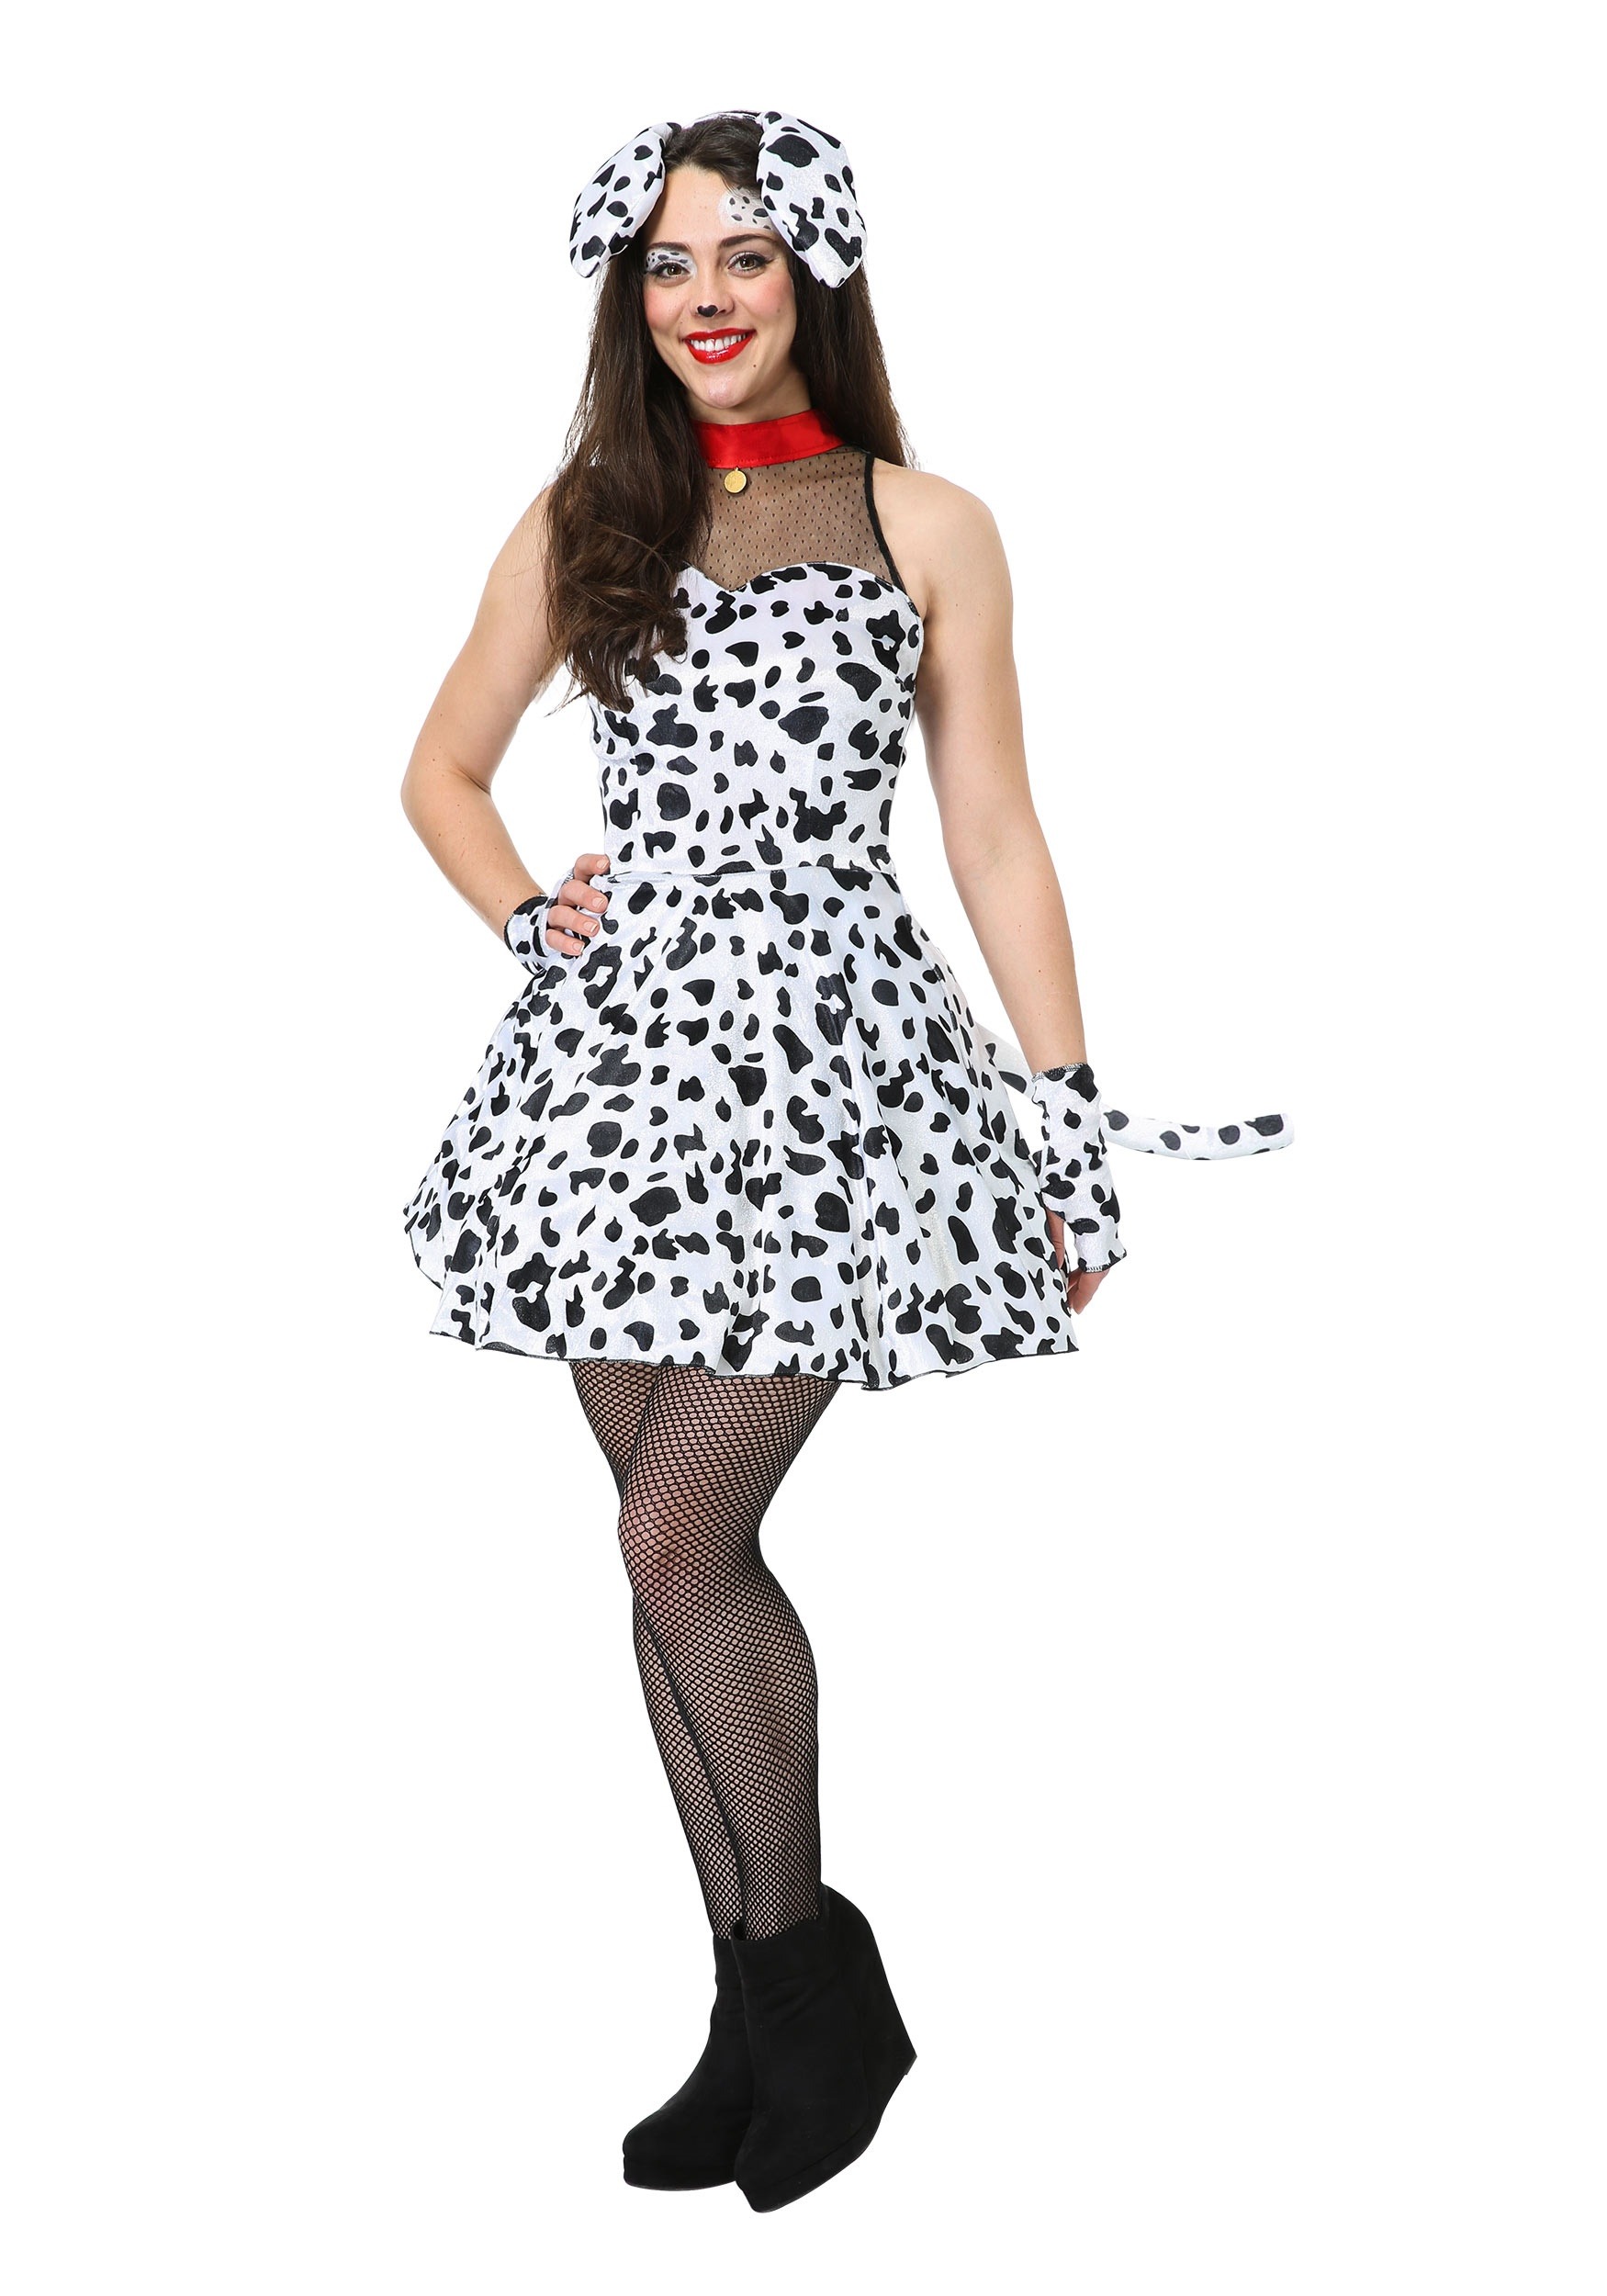 Photos - Fancy Dress FUN Costumes Flirty Dalmatian Costume for Women Black/Red/White